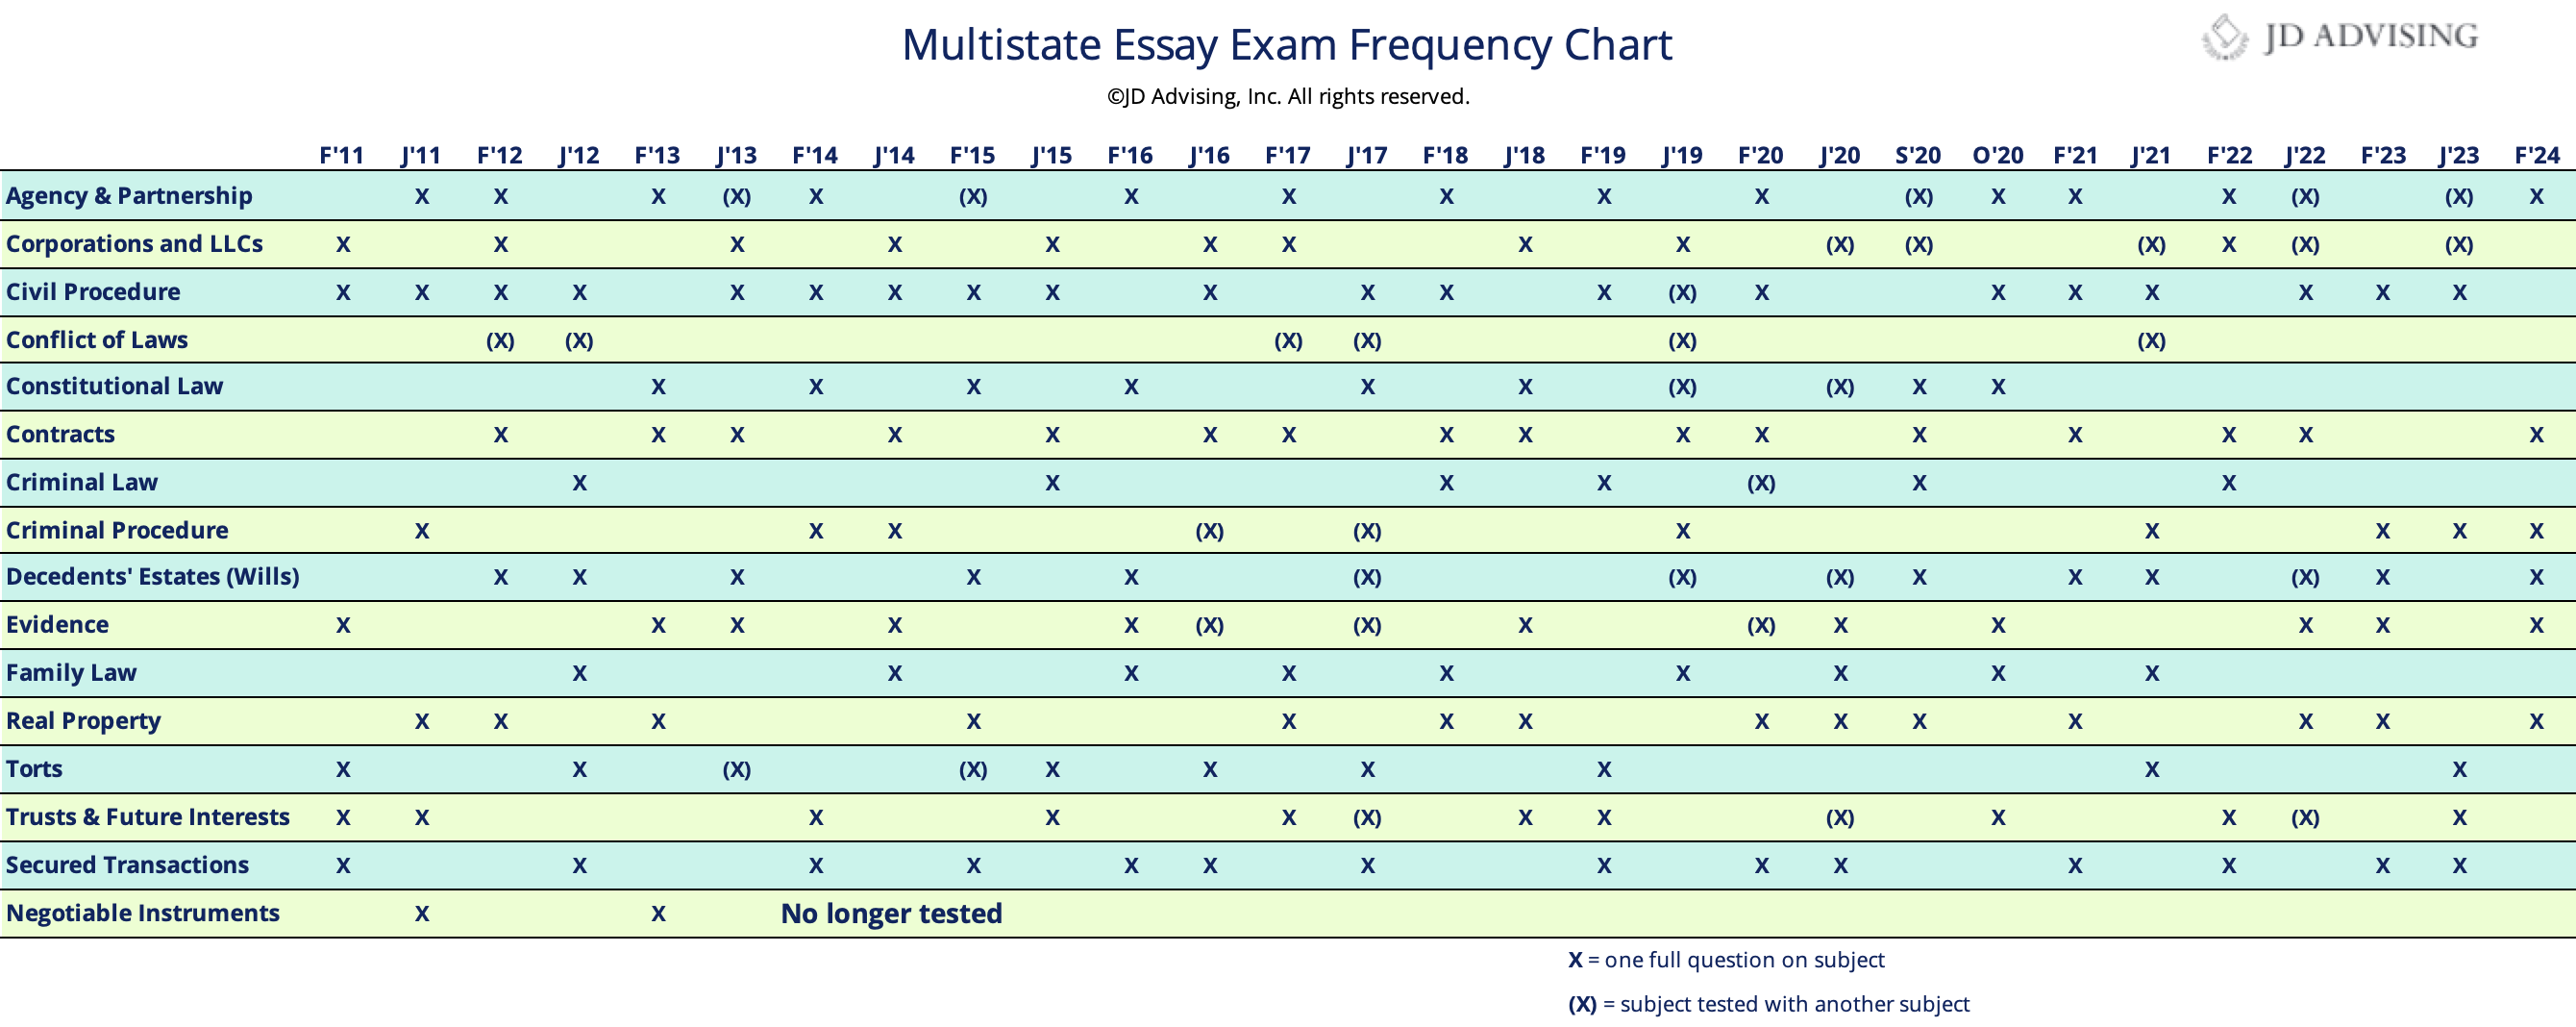 virginia bar exam essay subject frequency chart